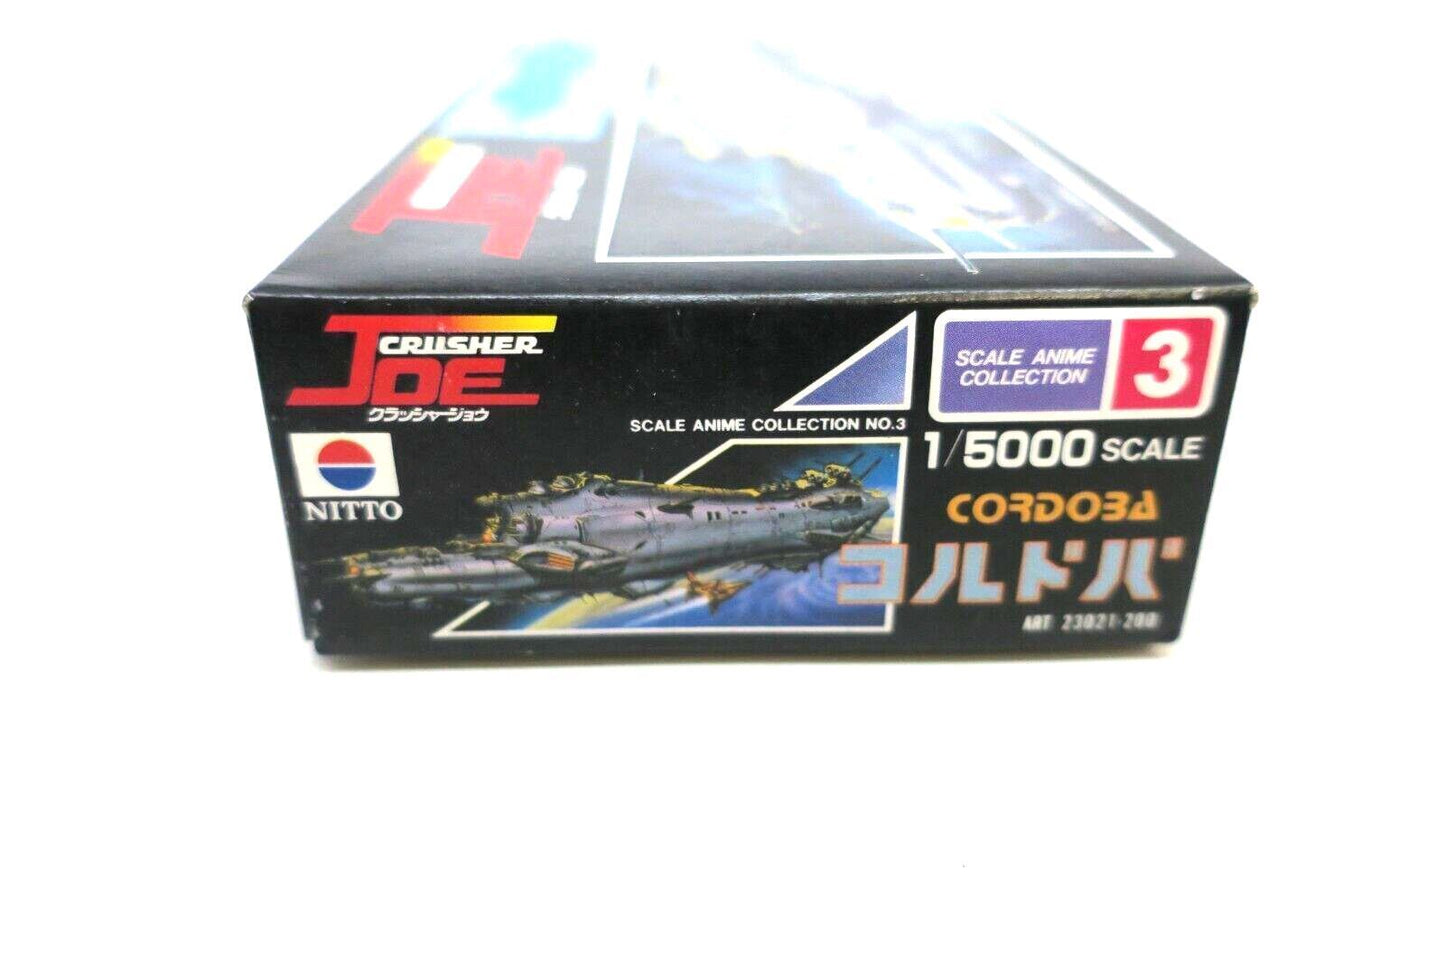 Takara/ Nitto Crusher Joe Cordoba 1/5000 Model Kit 23021-200 Japan B9